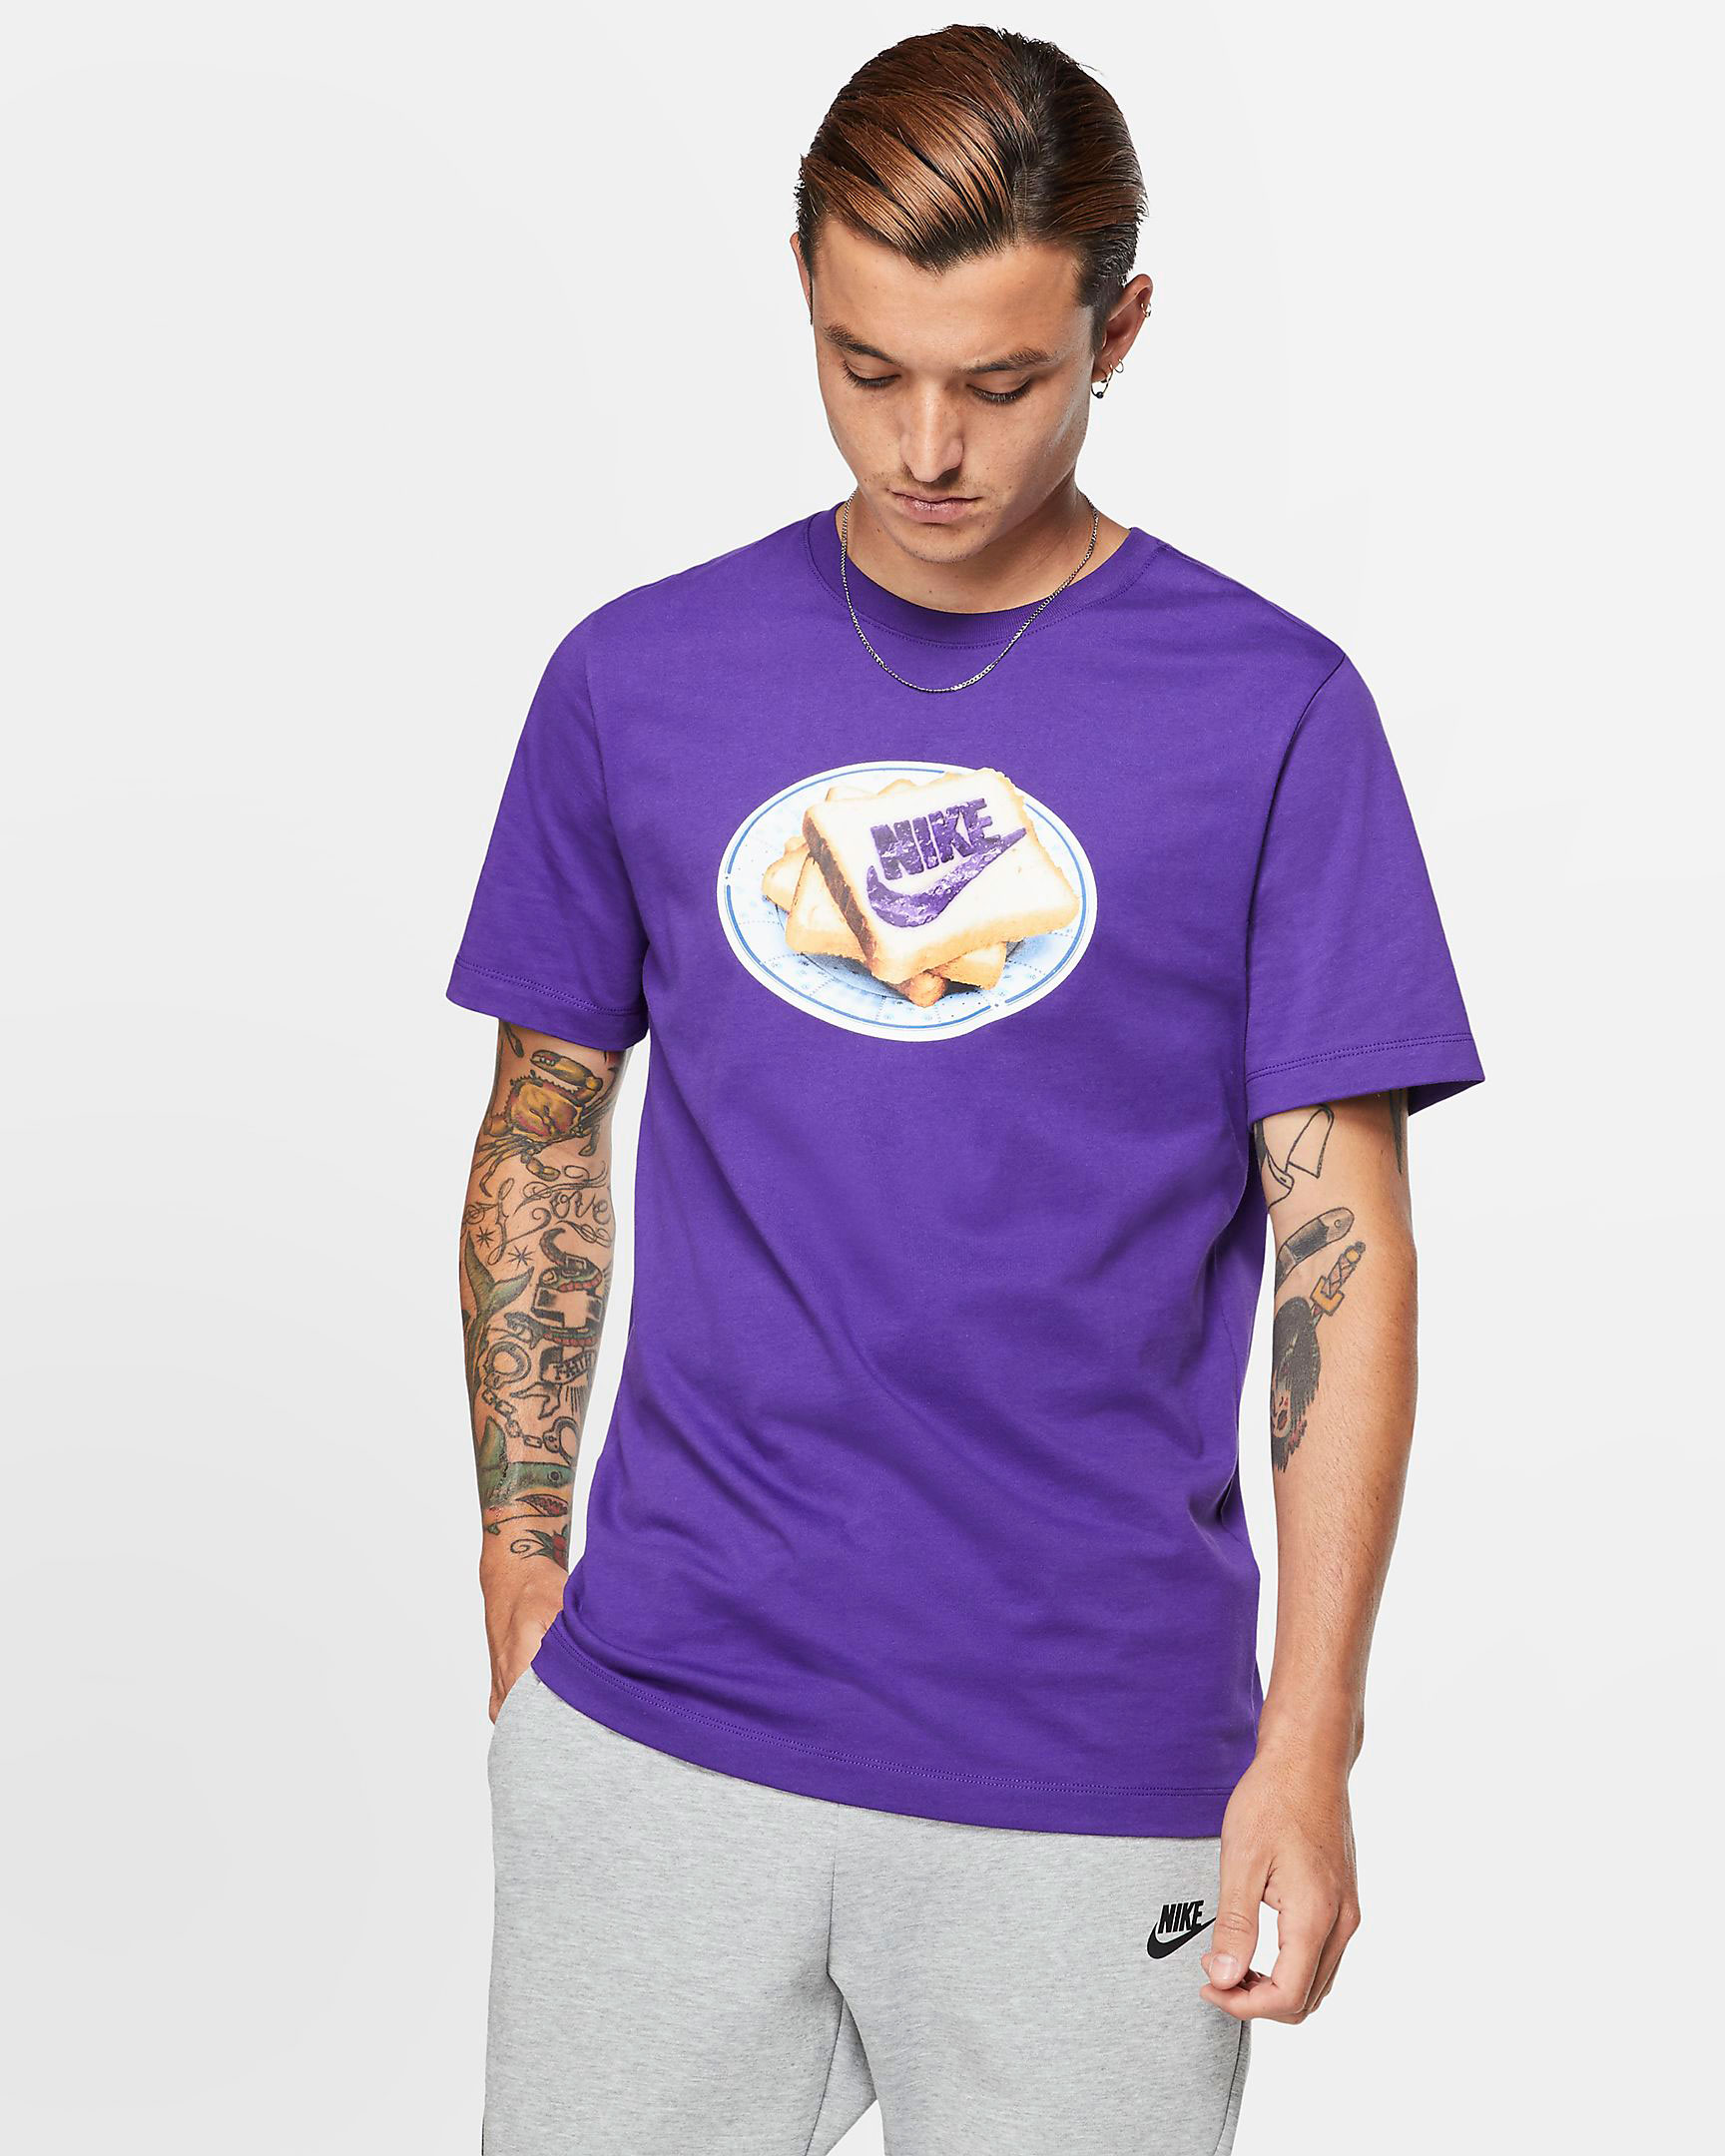 Foamposite Pro Purple Camo Nike Shirts 